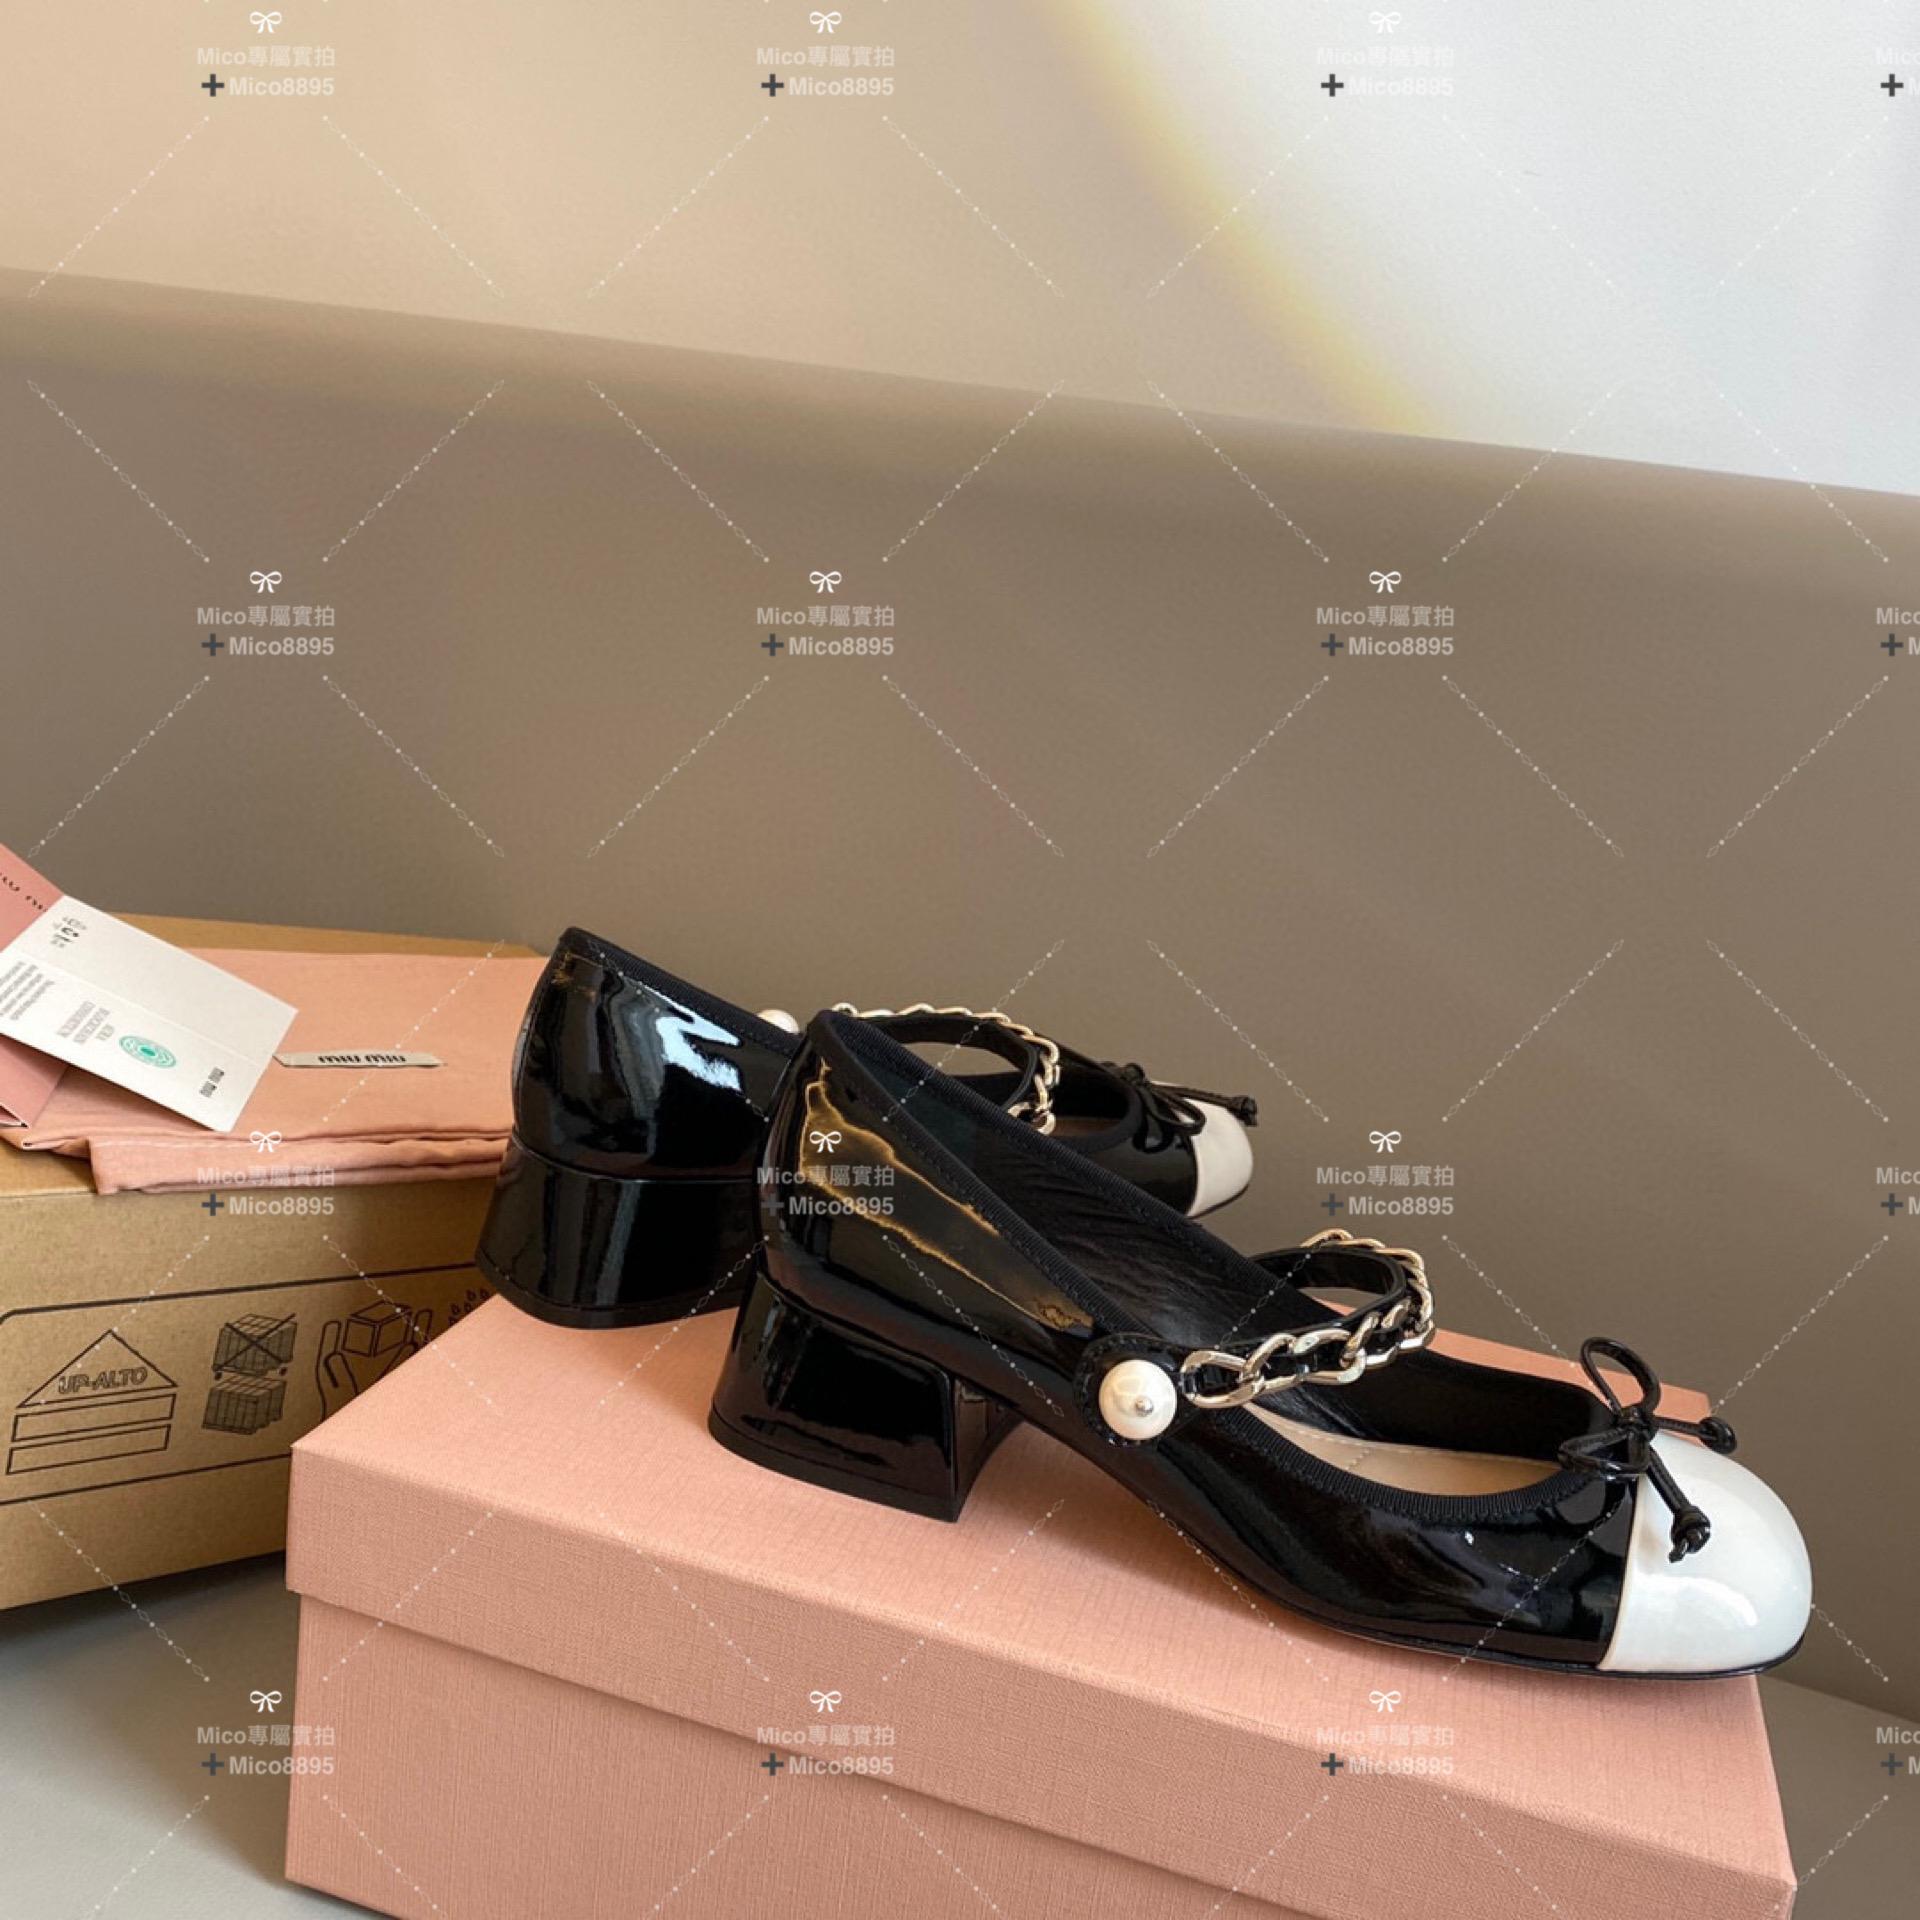 Miumiu 新品 瑪麗珍涼鞋 低跟款5.5cm 方頭涼鞋 非常修飾腳型 /35-40